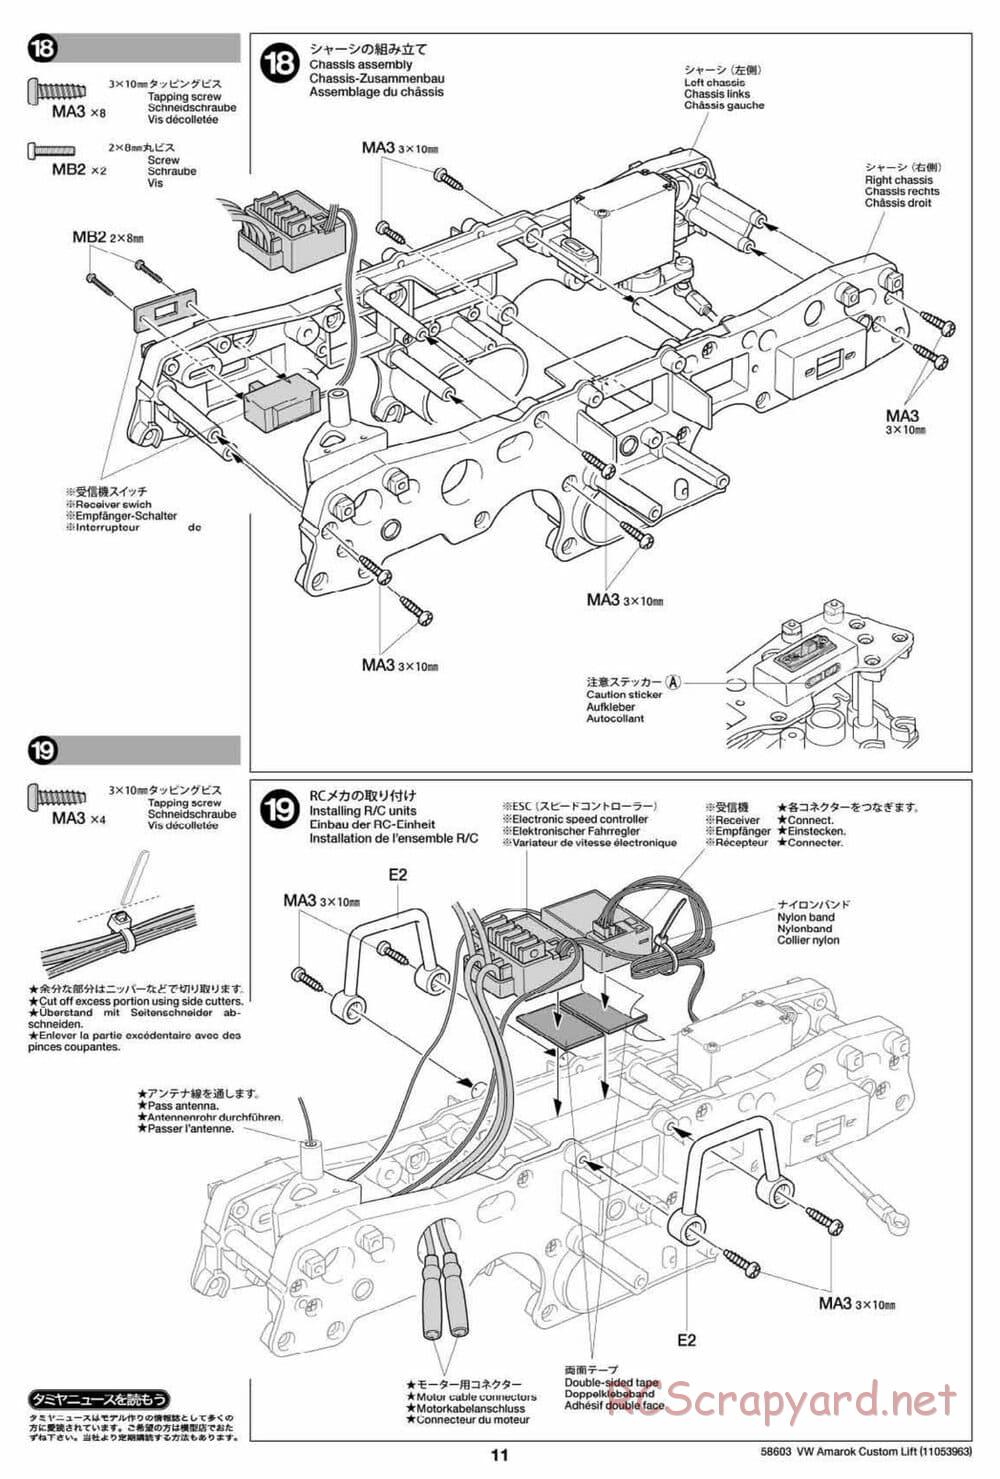 Tamiya - Volkswagen Amarok Custom Lift - WT-01N Chassis - Manual - Page 11